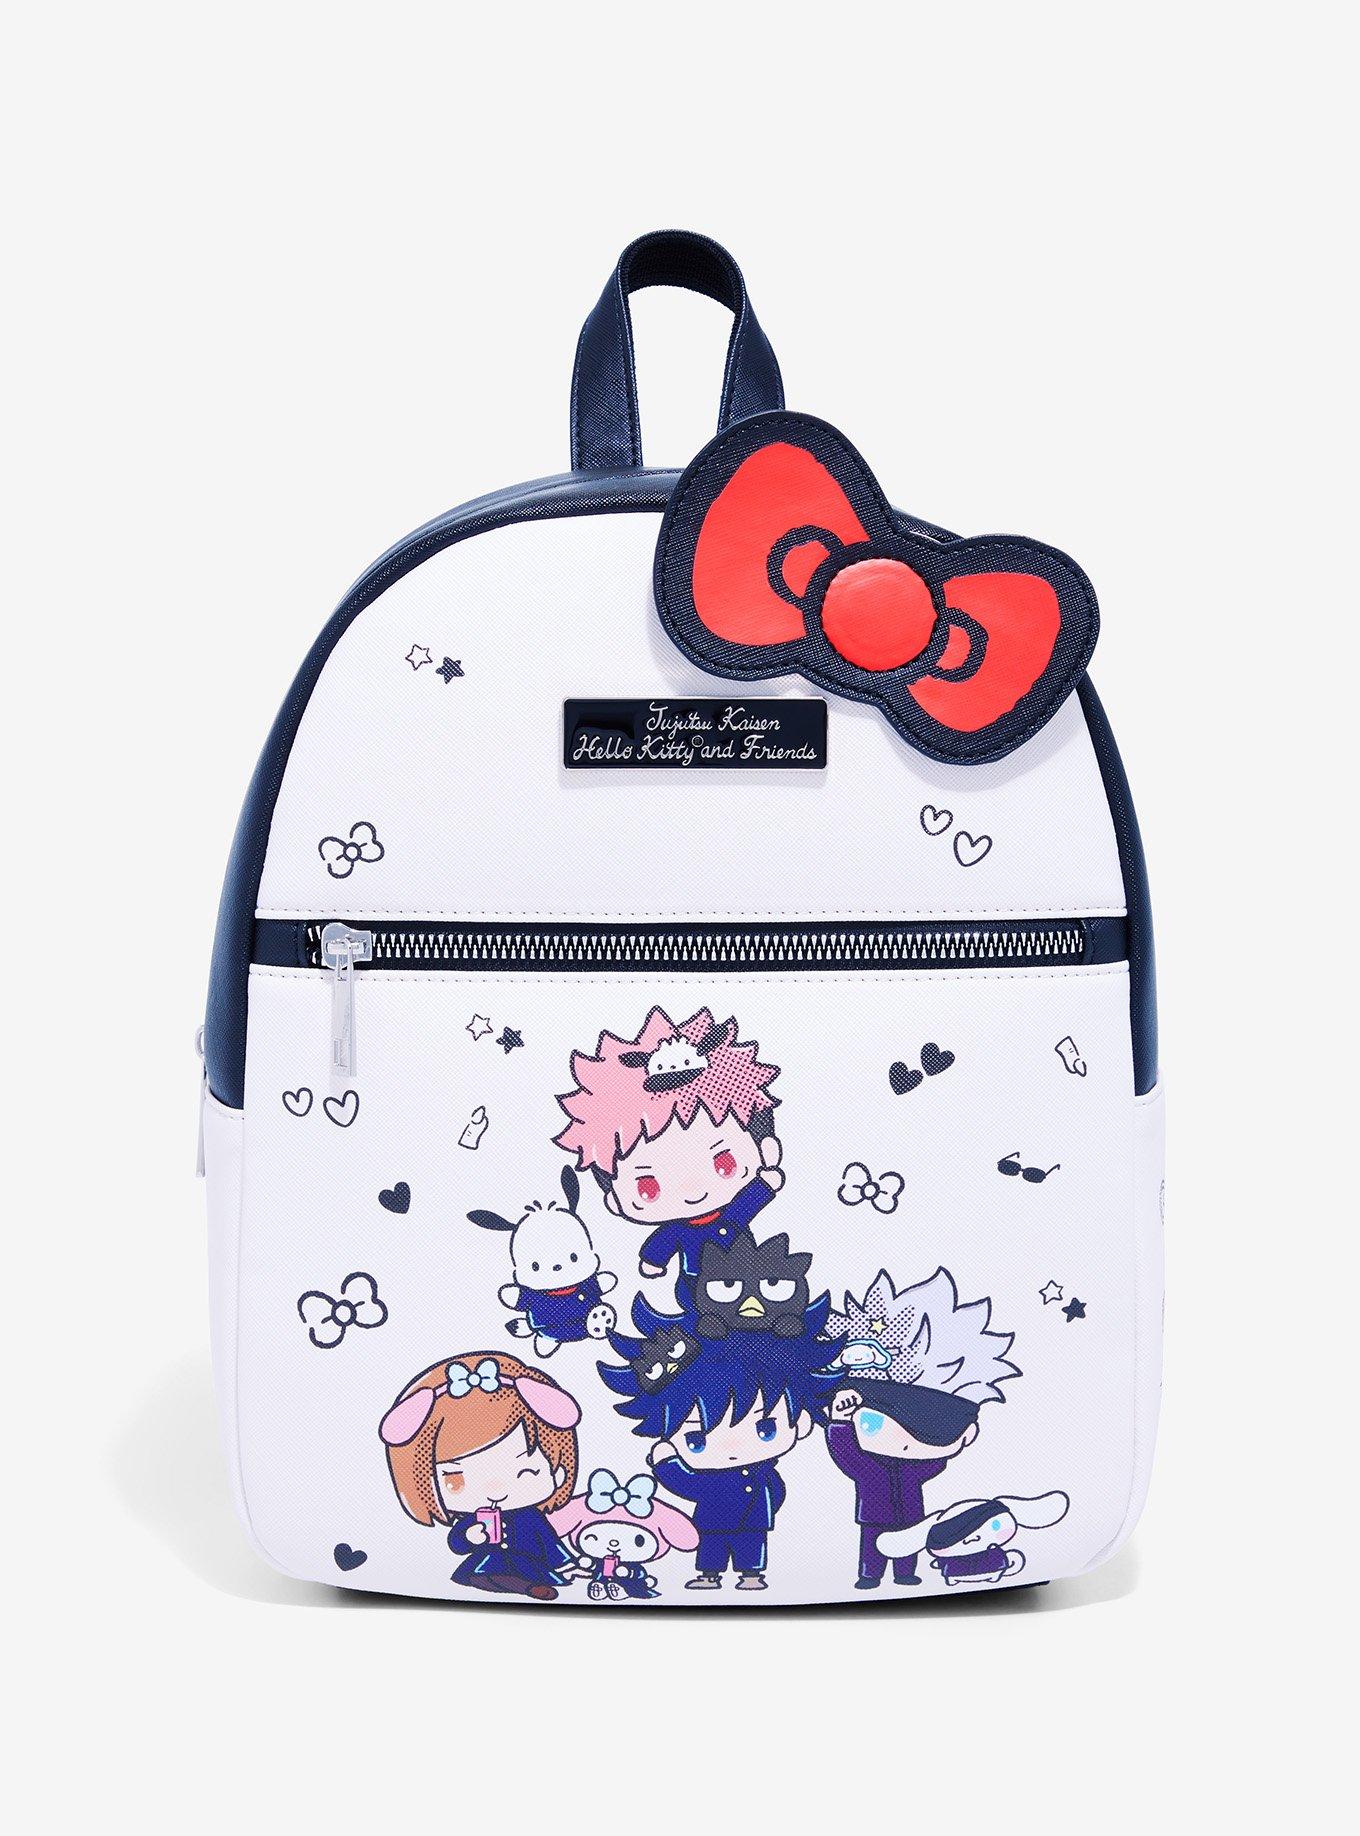 My new school bag came! : r/dbz